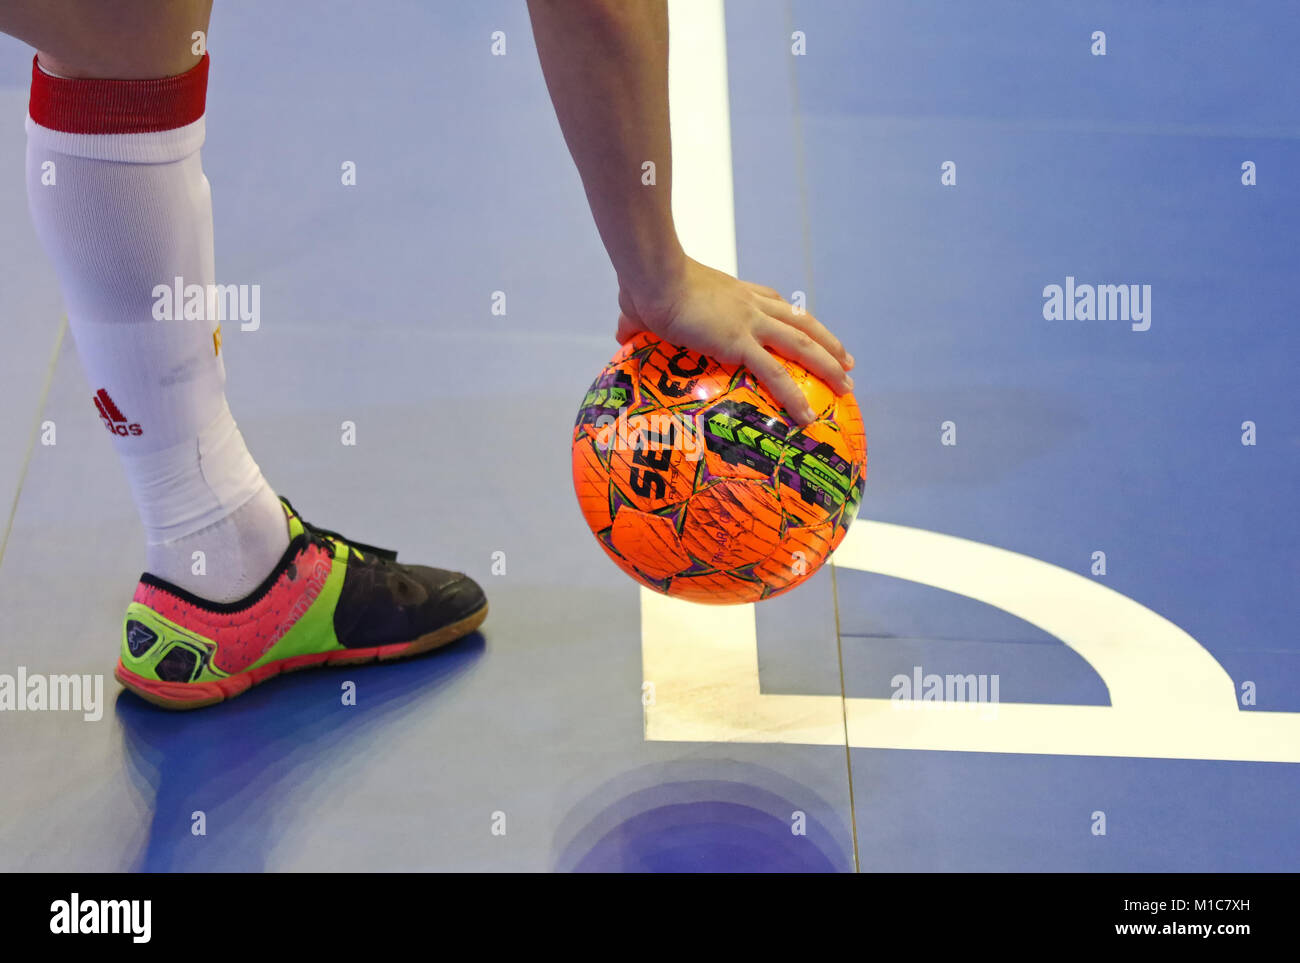 Zapatillas Fútbol Sala Infantil + Balón de REGALO – DEPORTES FIFA